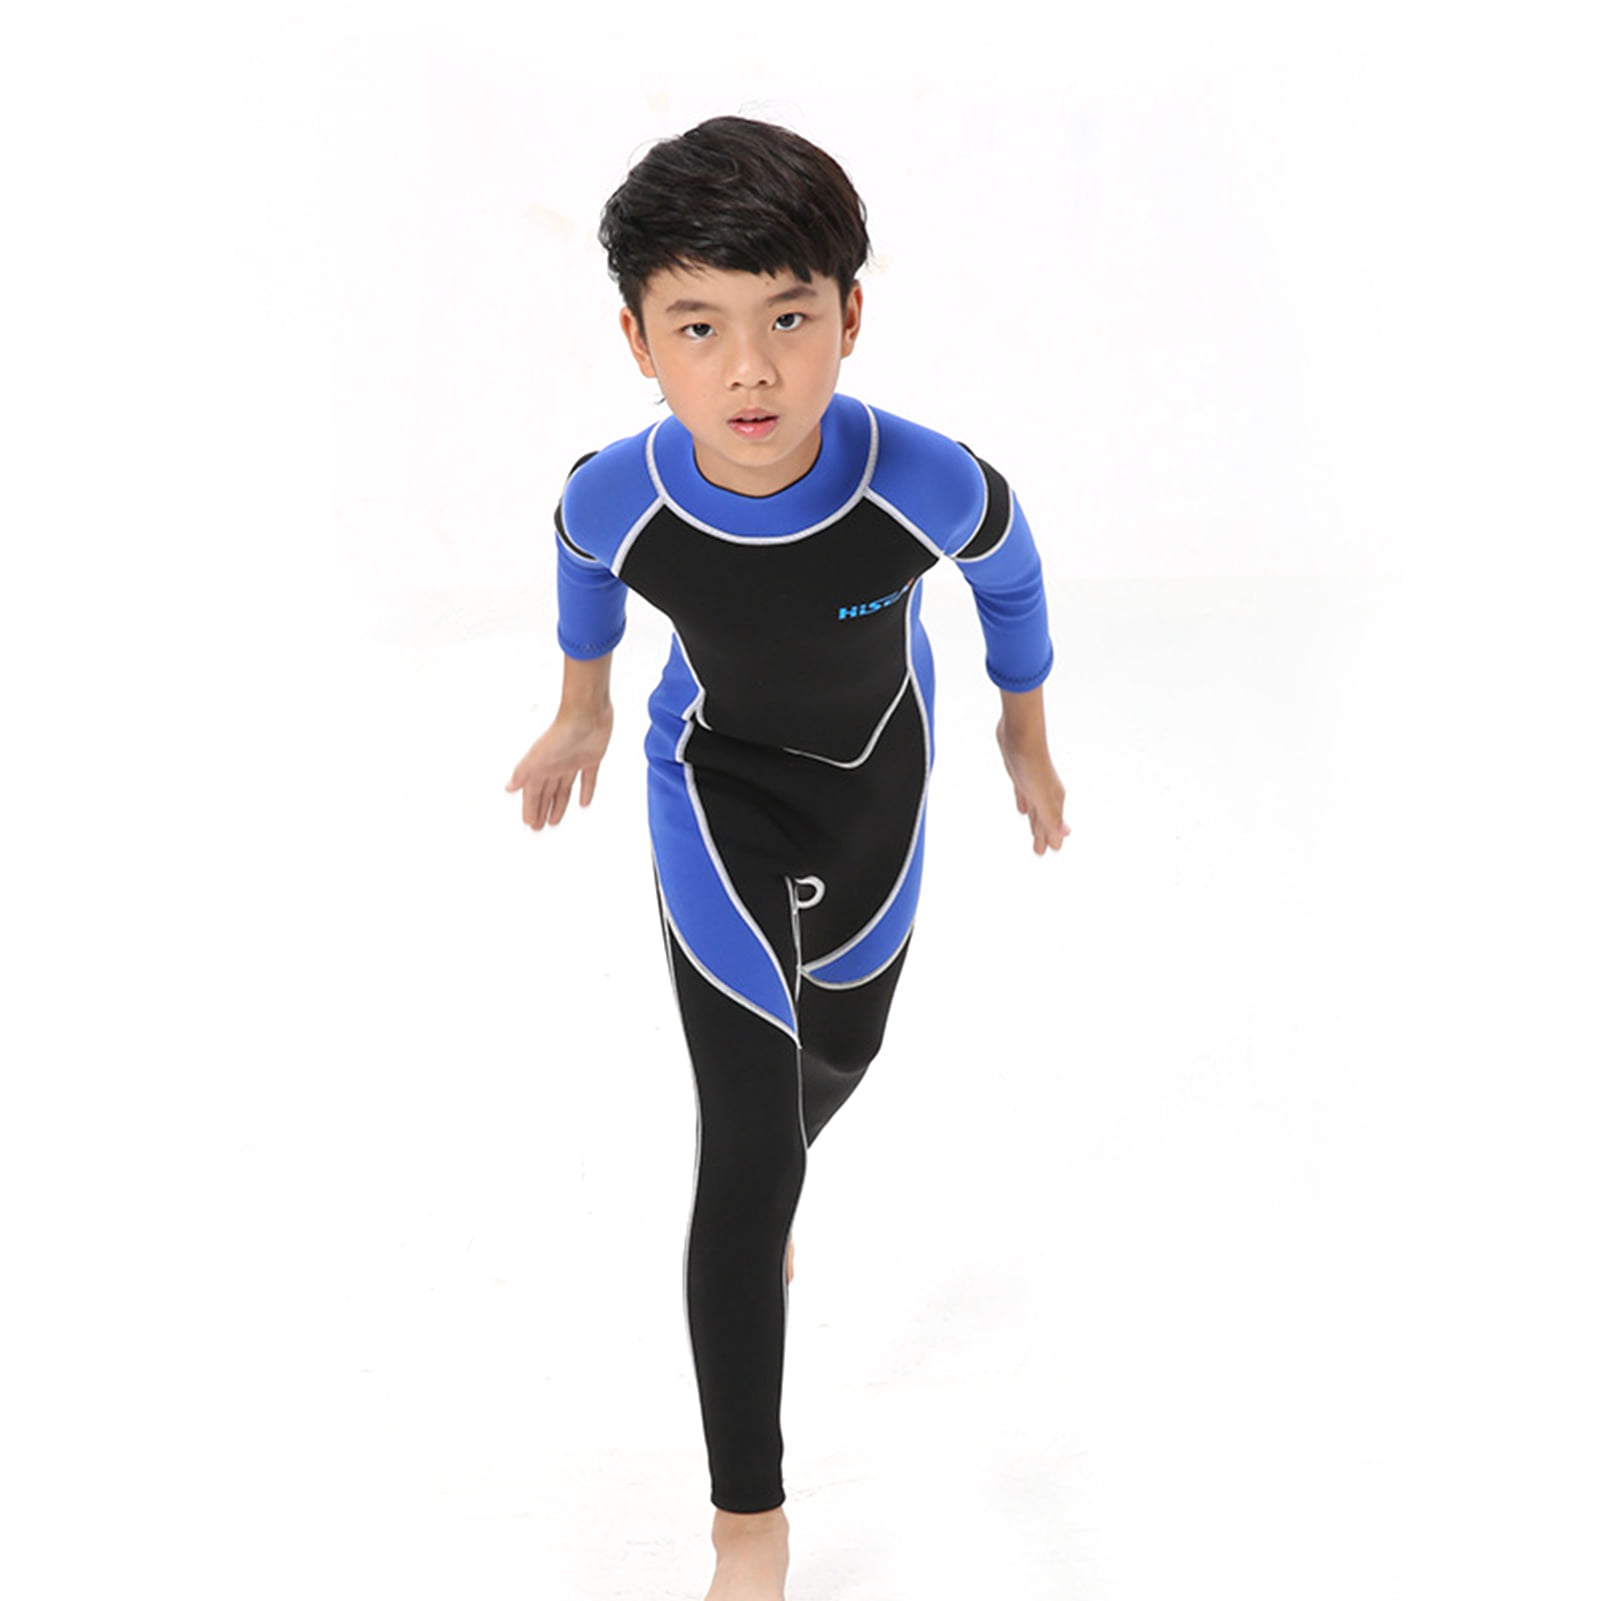 HISEA Wetsuit Men Neoprene Full Scuba Diving Suits Thermal Swimsuit Long Sleeve Back Zip for Water Sports